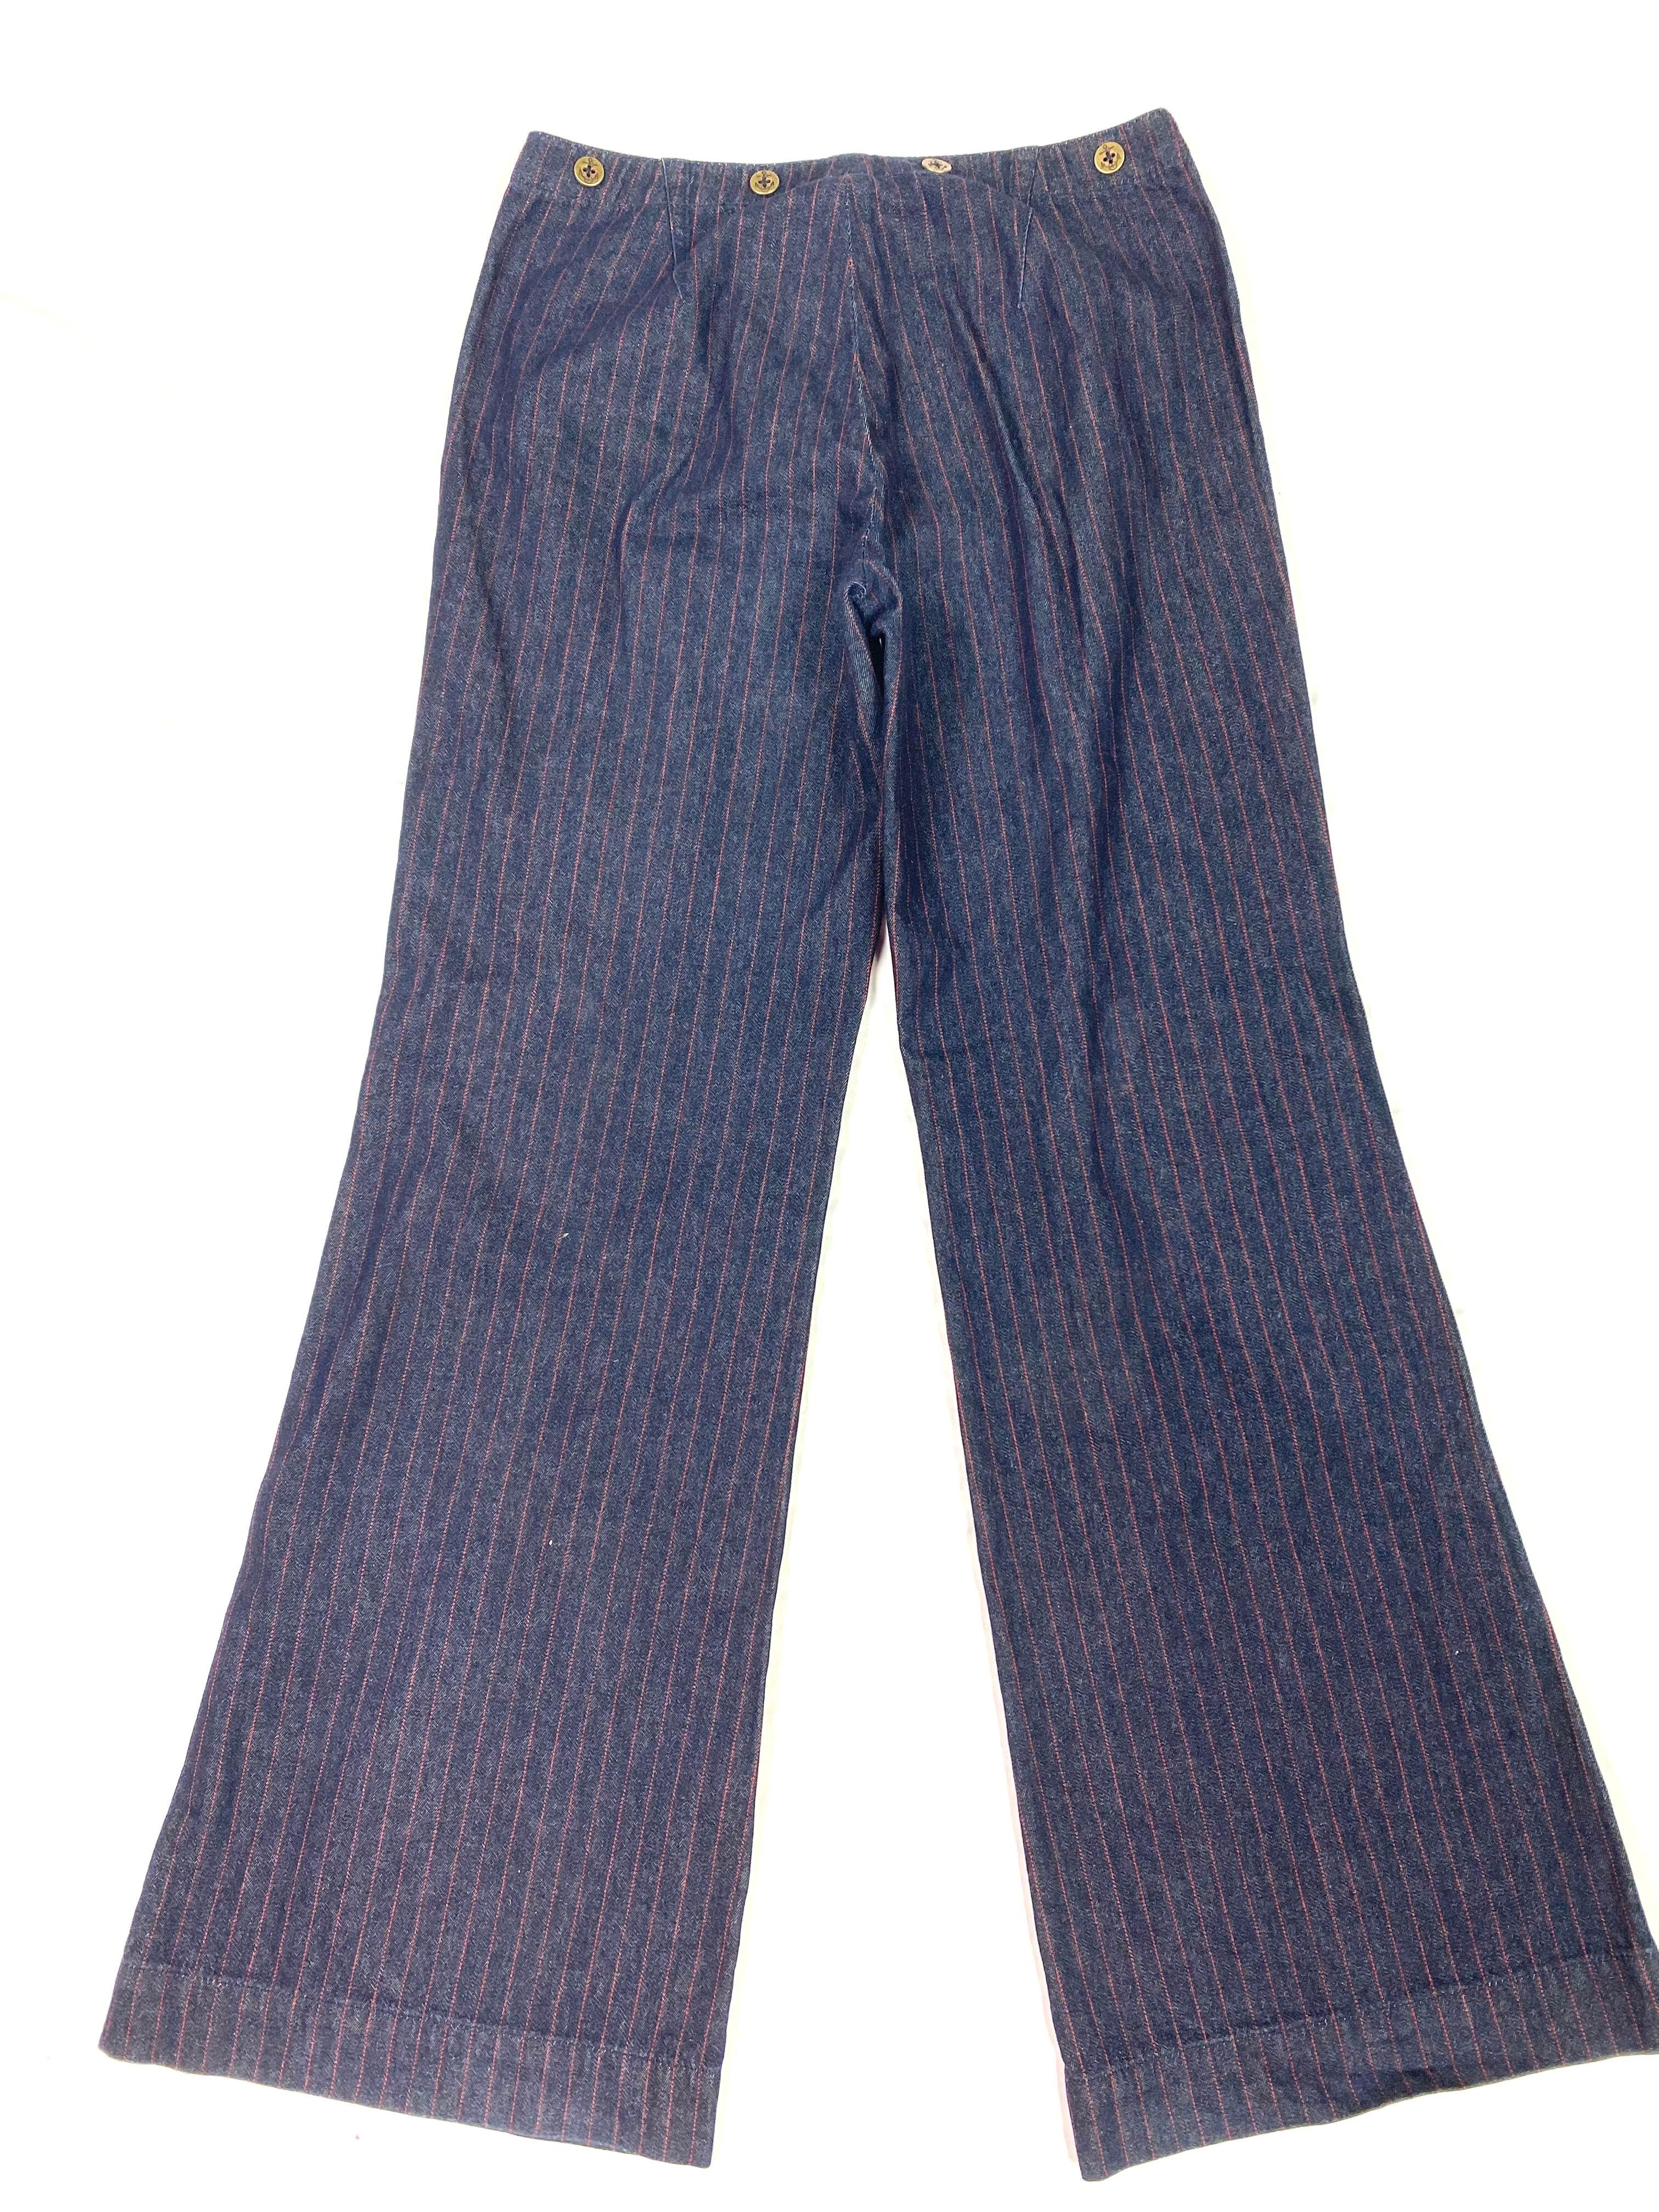 Lauren Jeans Company Ralph Lauren Dark Blue Straight Jeans, Size 4 For ...